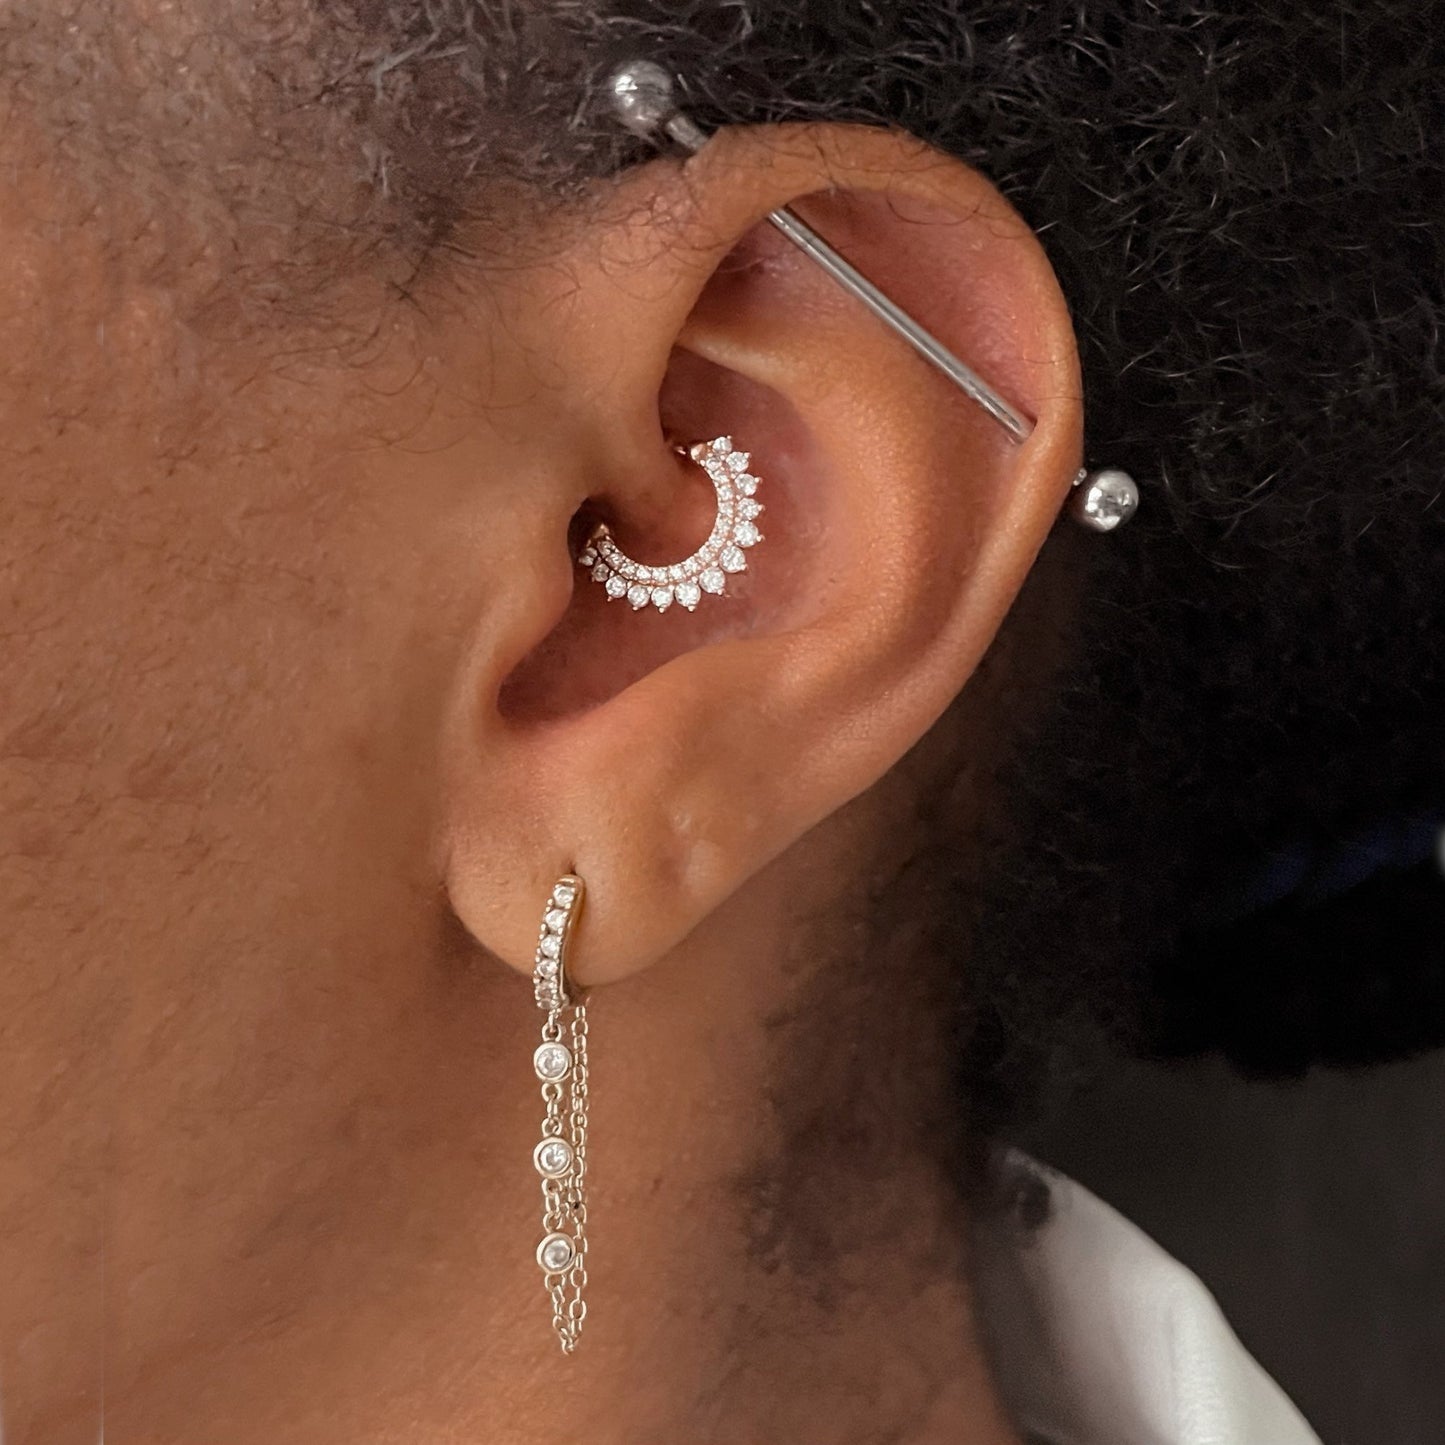 A woman wearing multiple cartilage piercings.